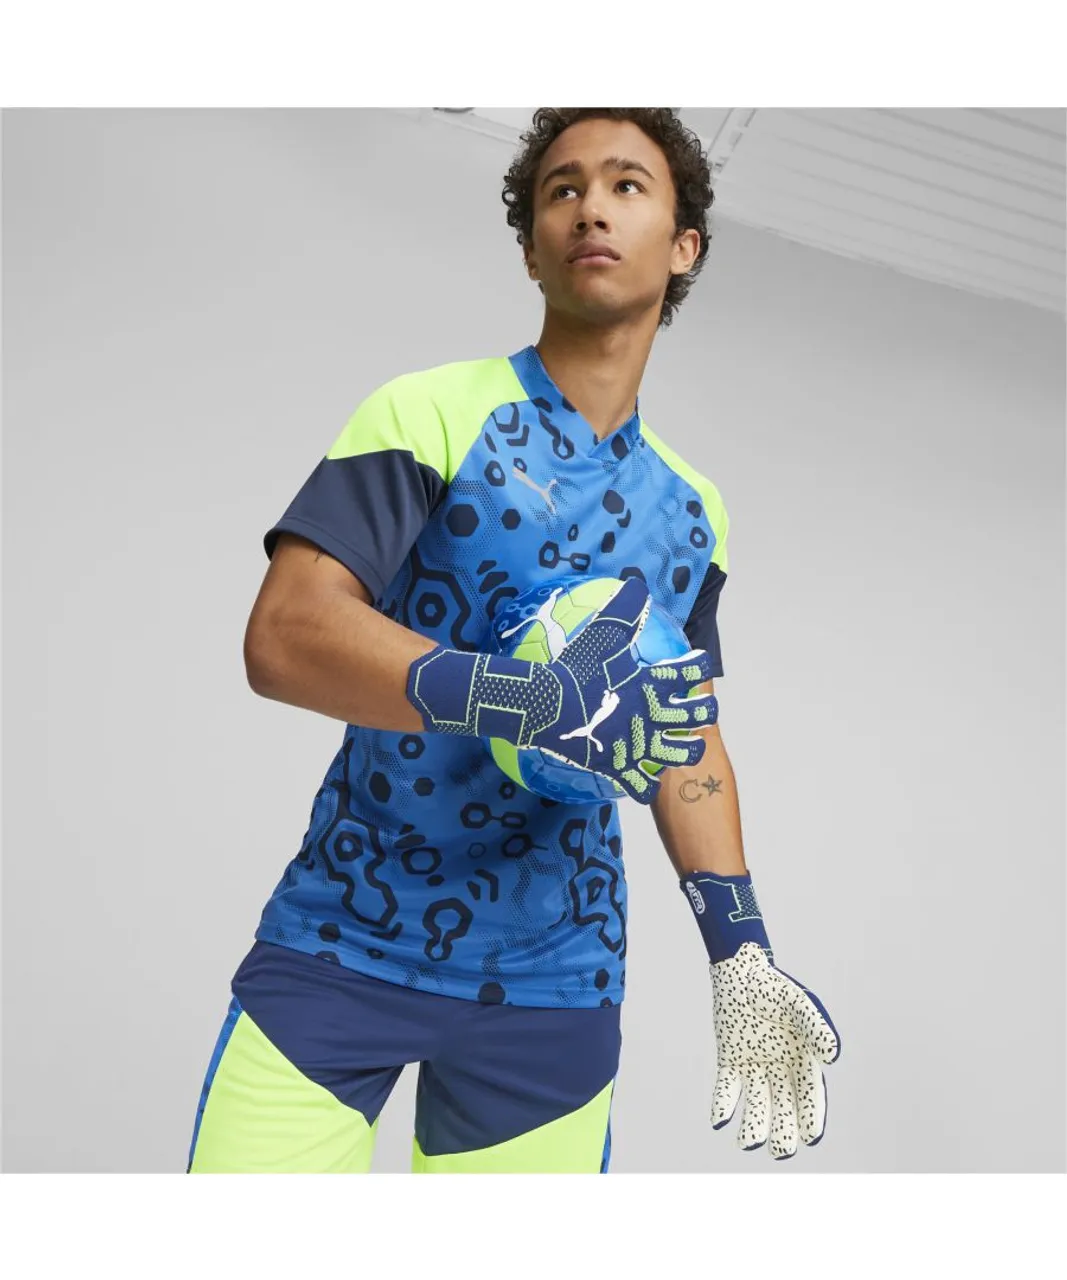 Puma Unisex FUTURE Ultimate Negative Cut Football Goalkeeper Gloves - Blue - Size 9 (Gloves)